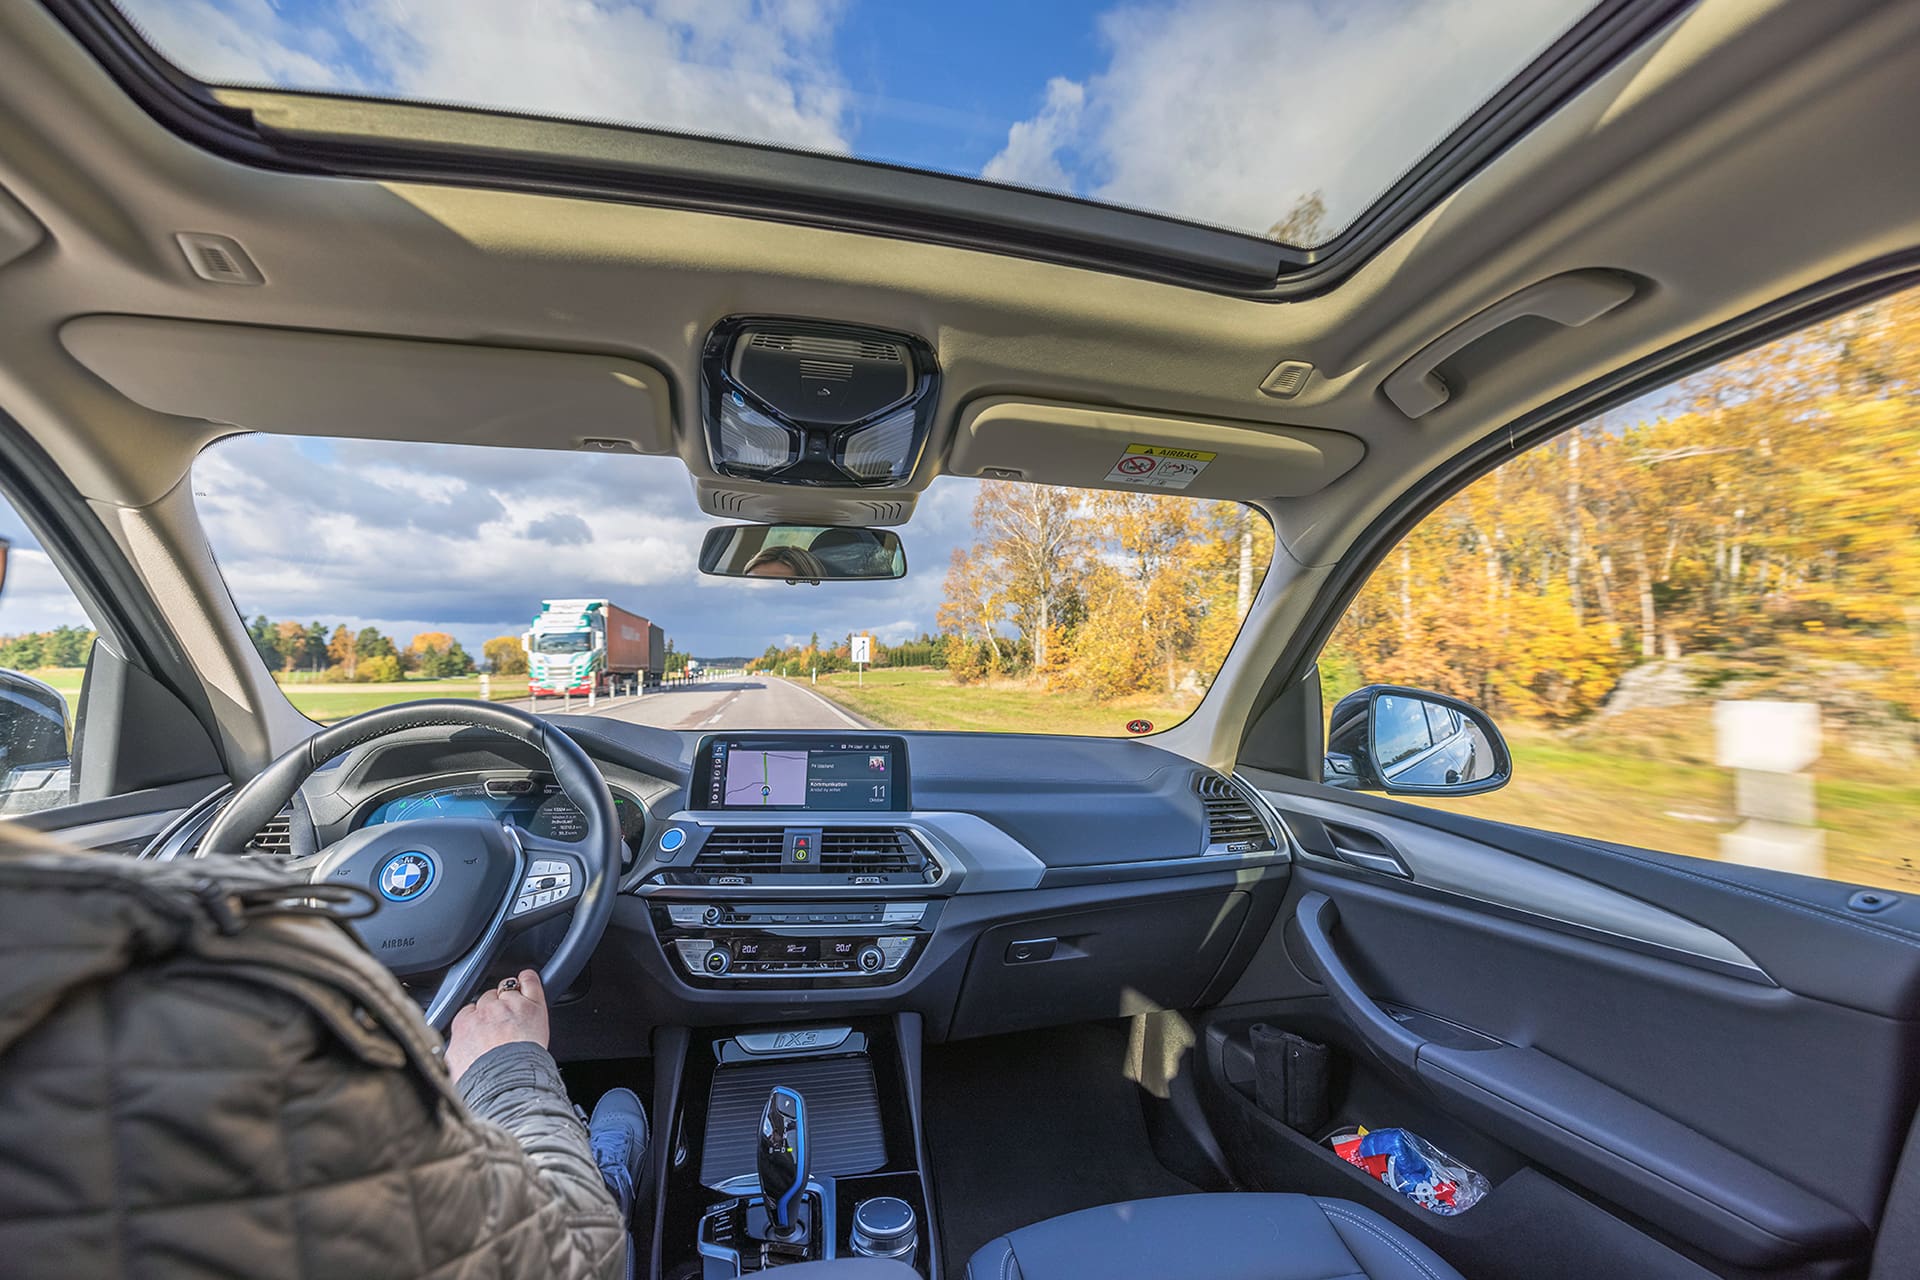 Interior of BMW EV on the road